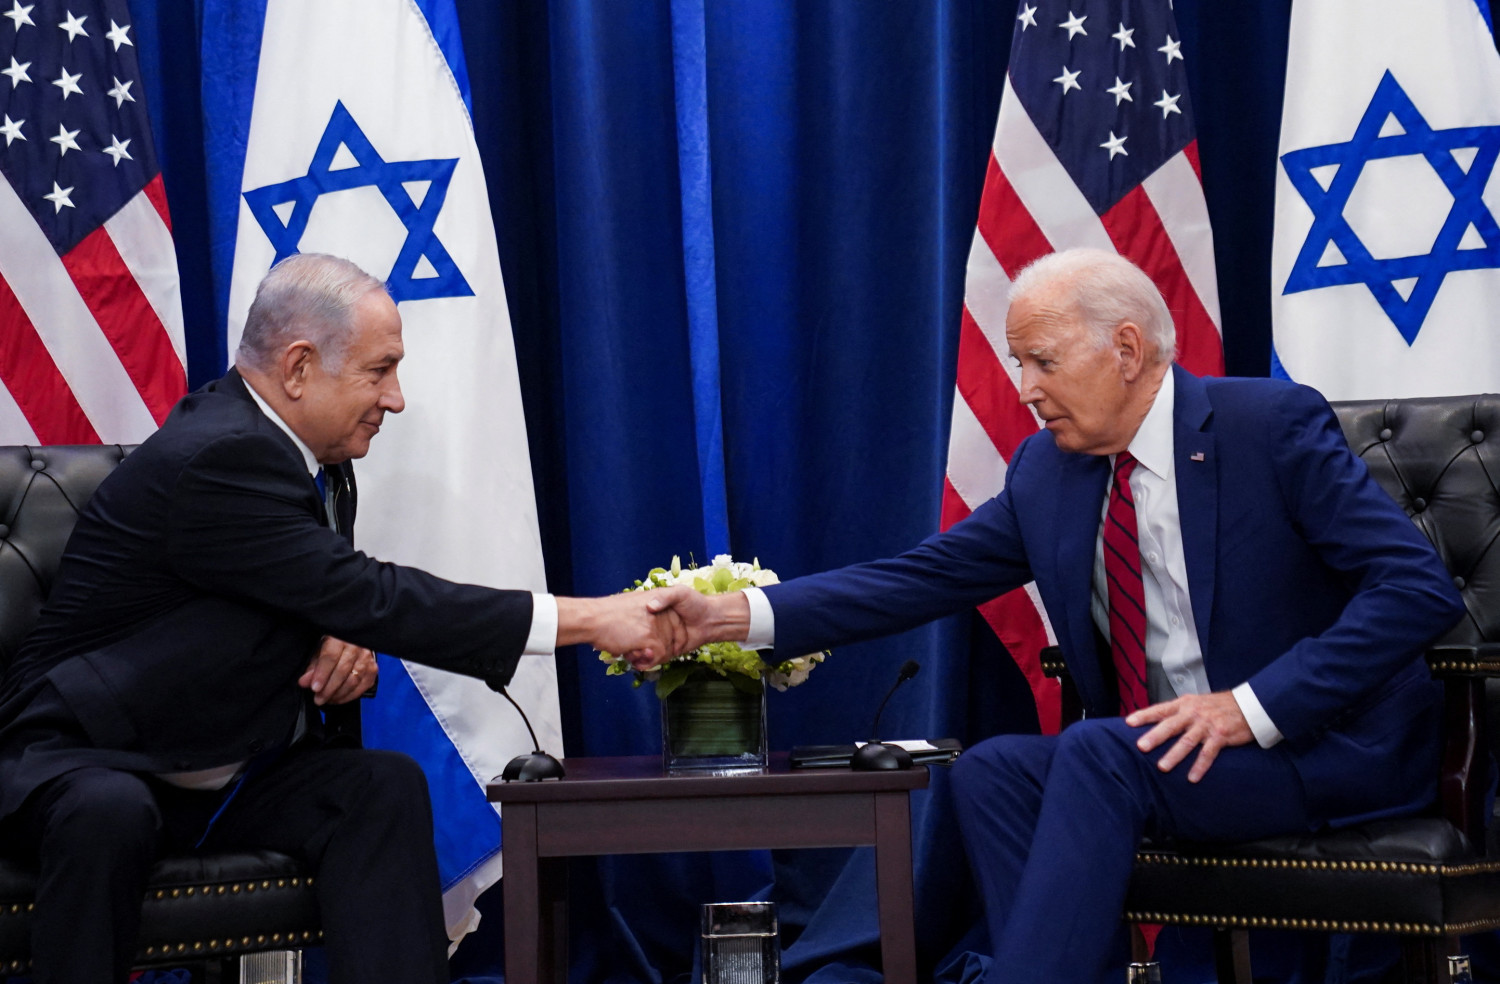 https://img1.s3wfg.com/web/img/images_uploaded/b/7/le-president-americain-joe-biden-tient-une-reunion-bilaterale-avec-le-premier-ministre-israelien-benjamin-netanyahu-a-new-york_rsz.jpg